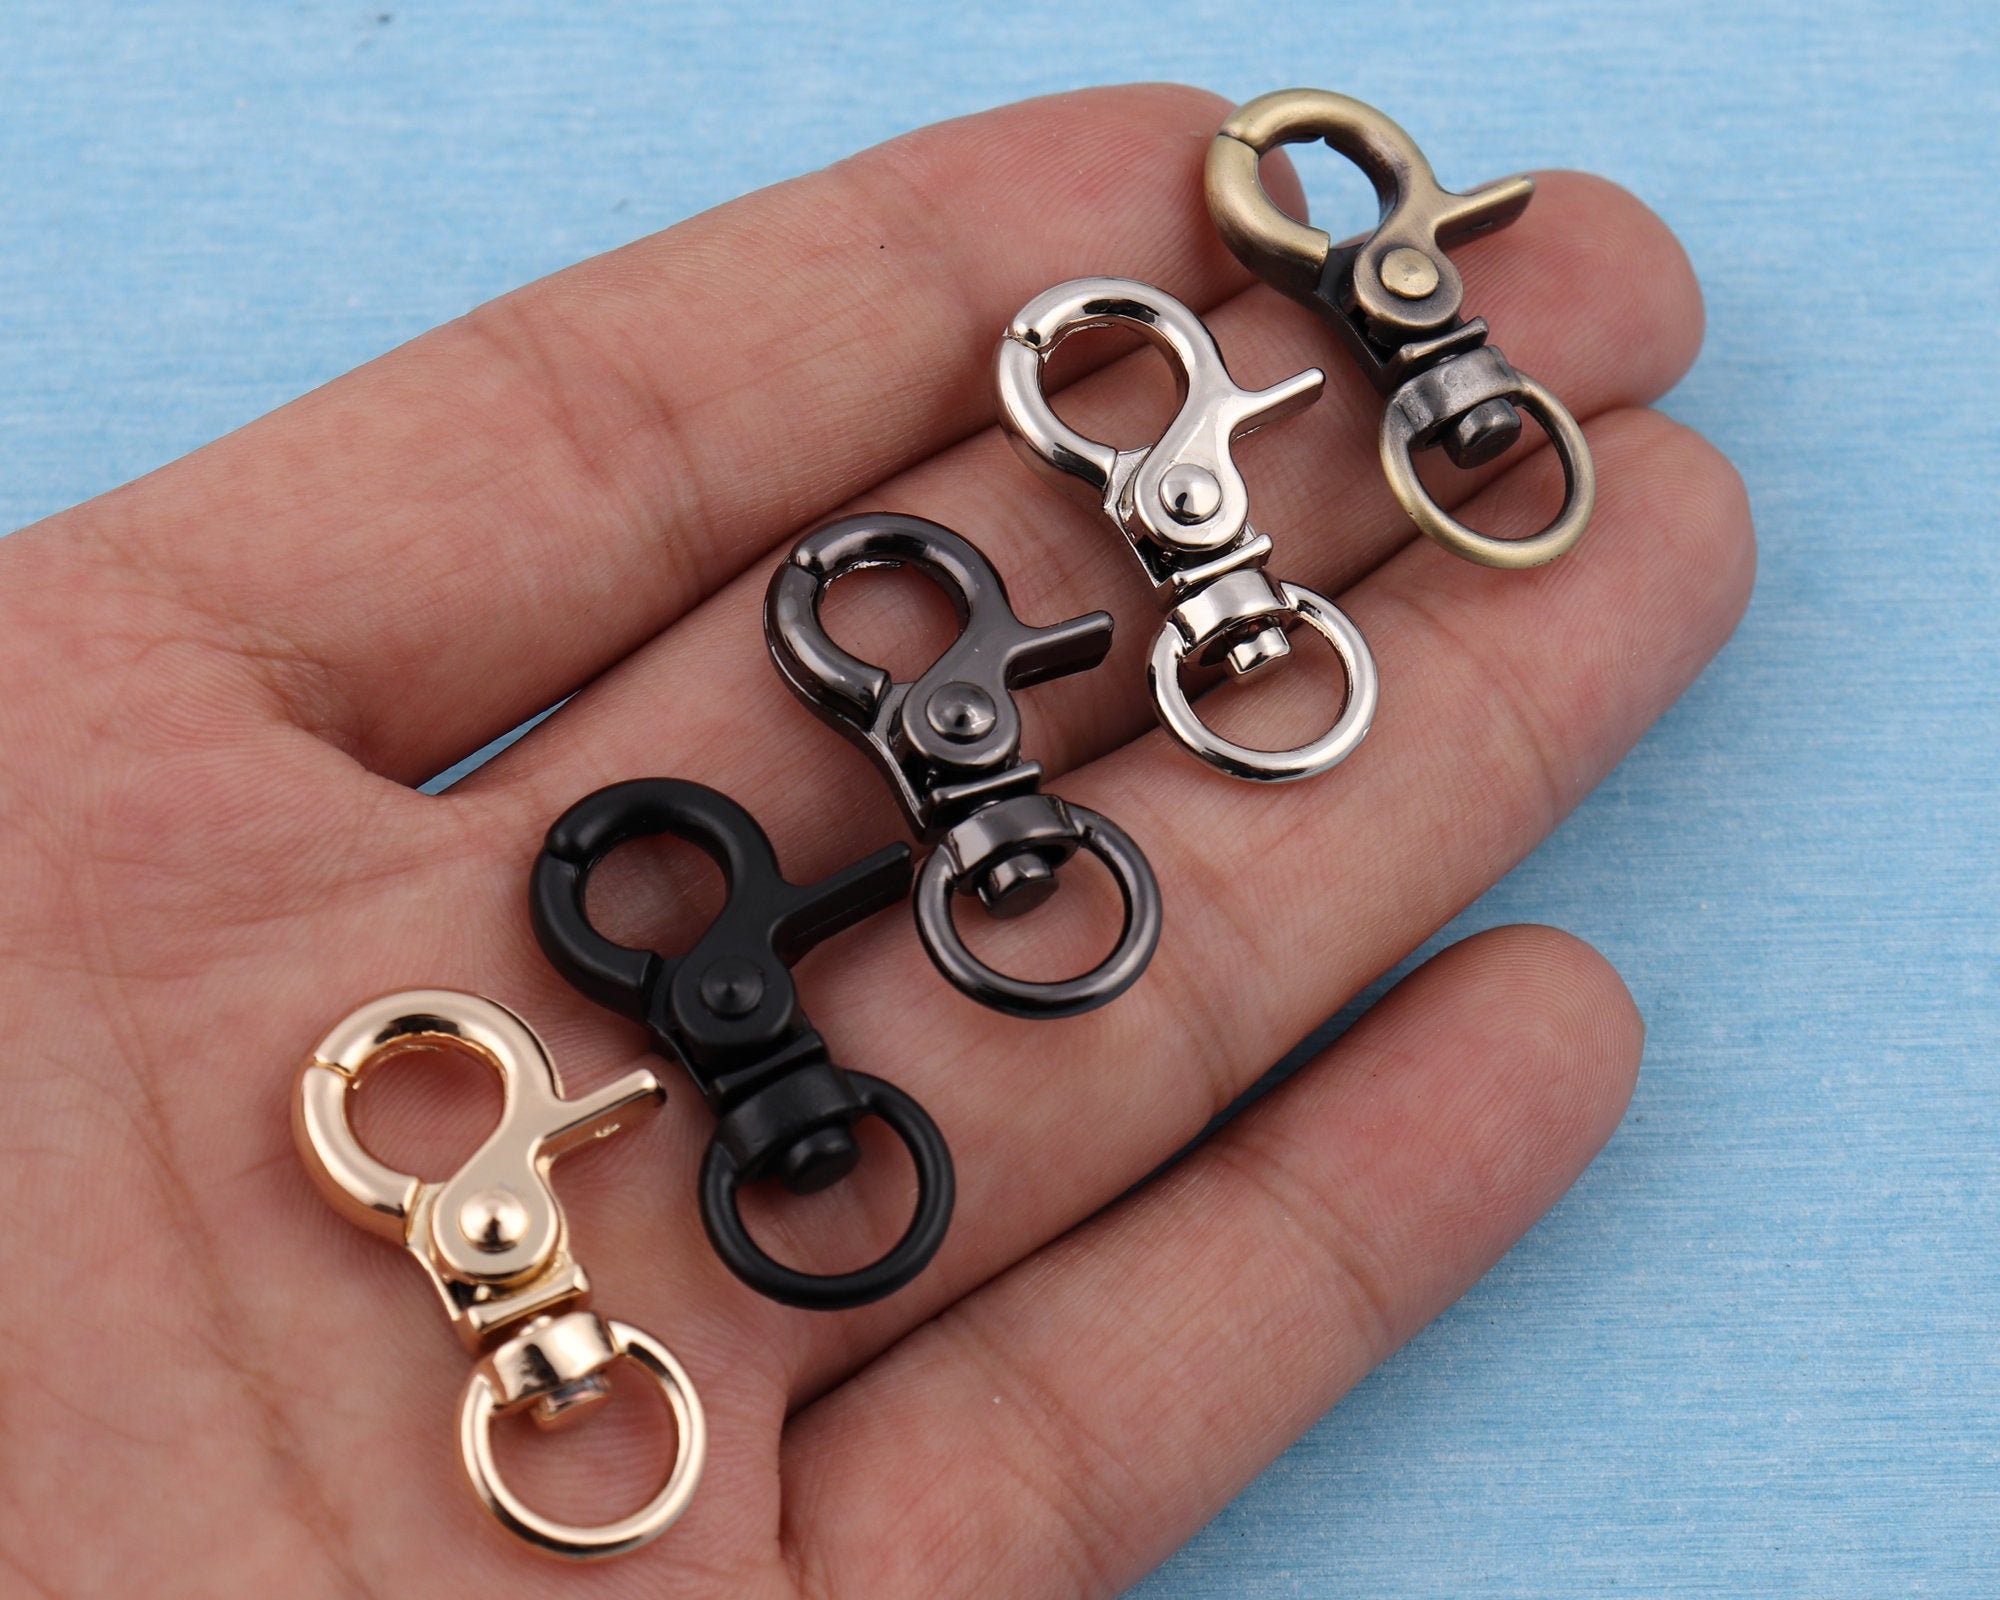 20pcs Alloy Swivel Lobster Claw Clasps Hook for jewelry making DIY Bracelet  Necklace Keys Bags Links